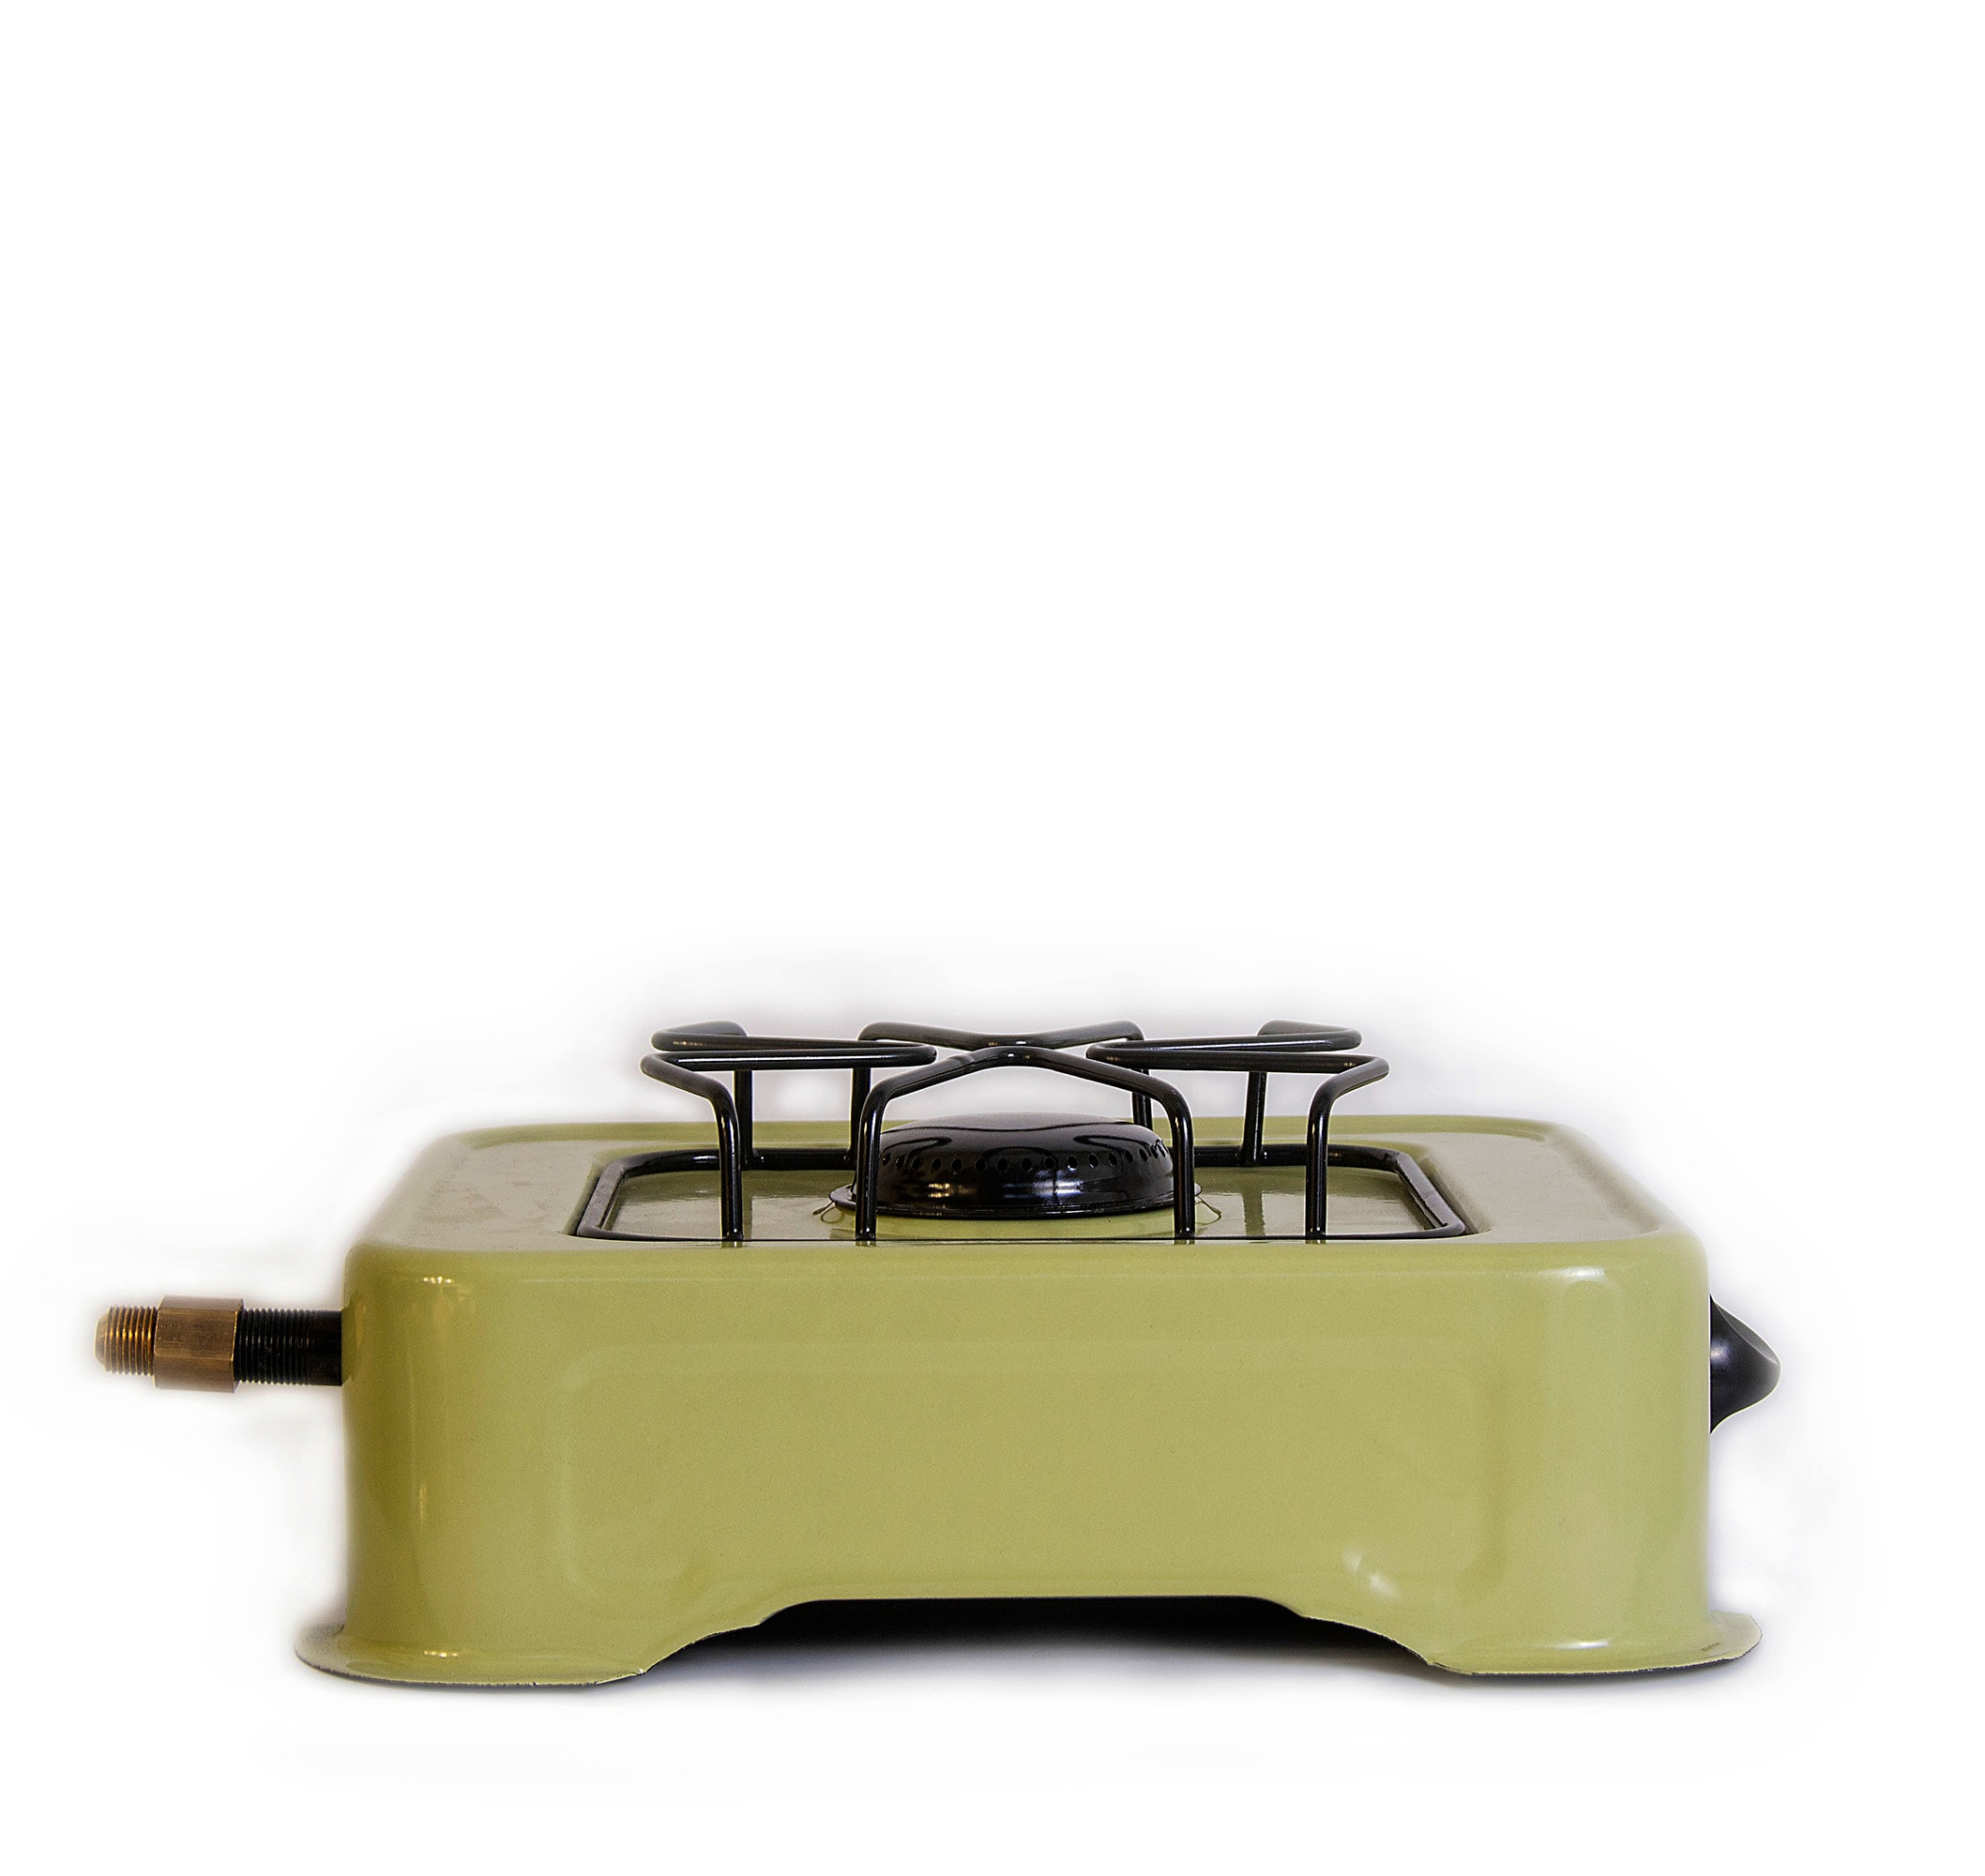 Double Burner Portable Propane Stovetop